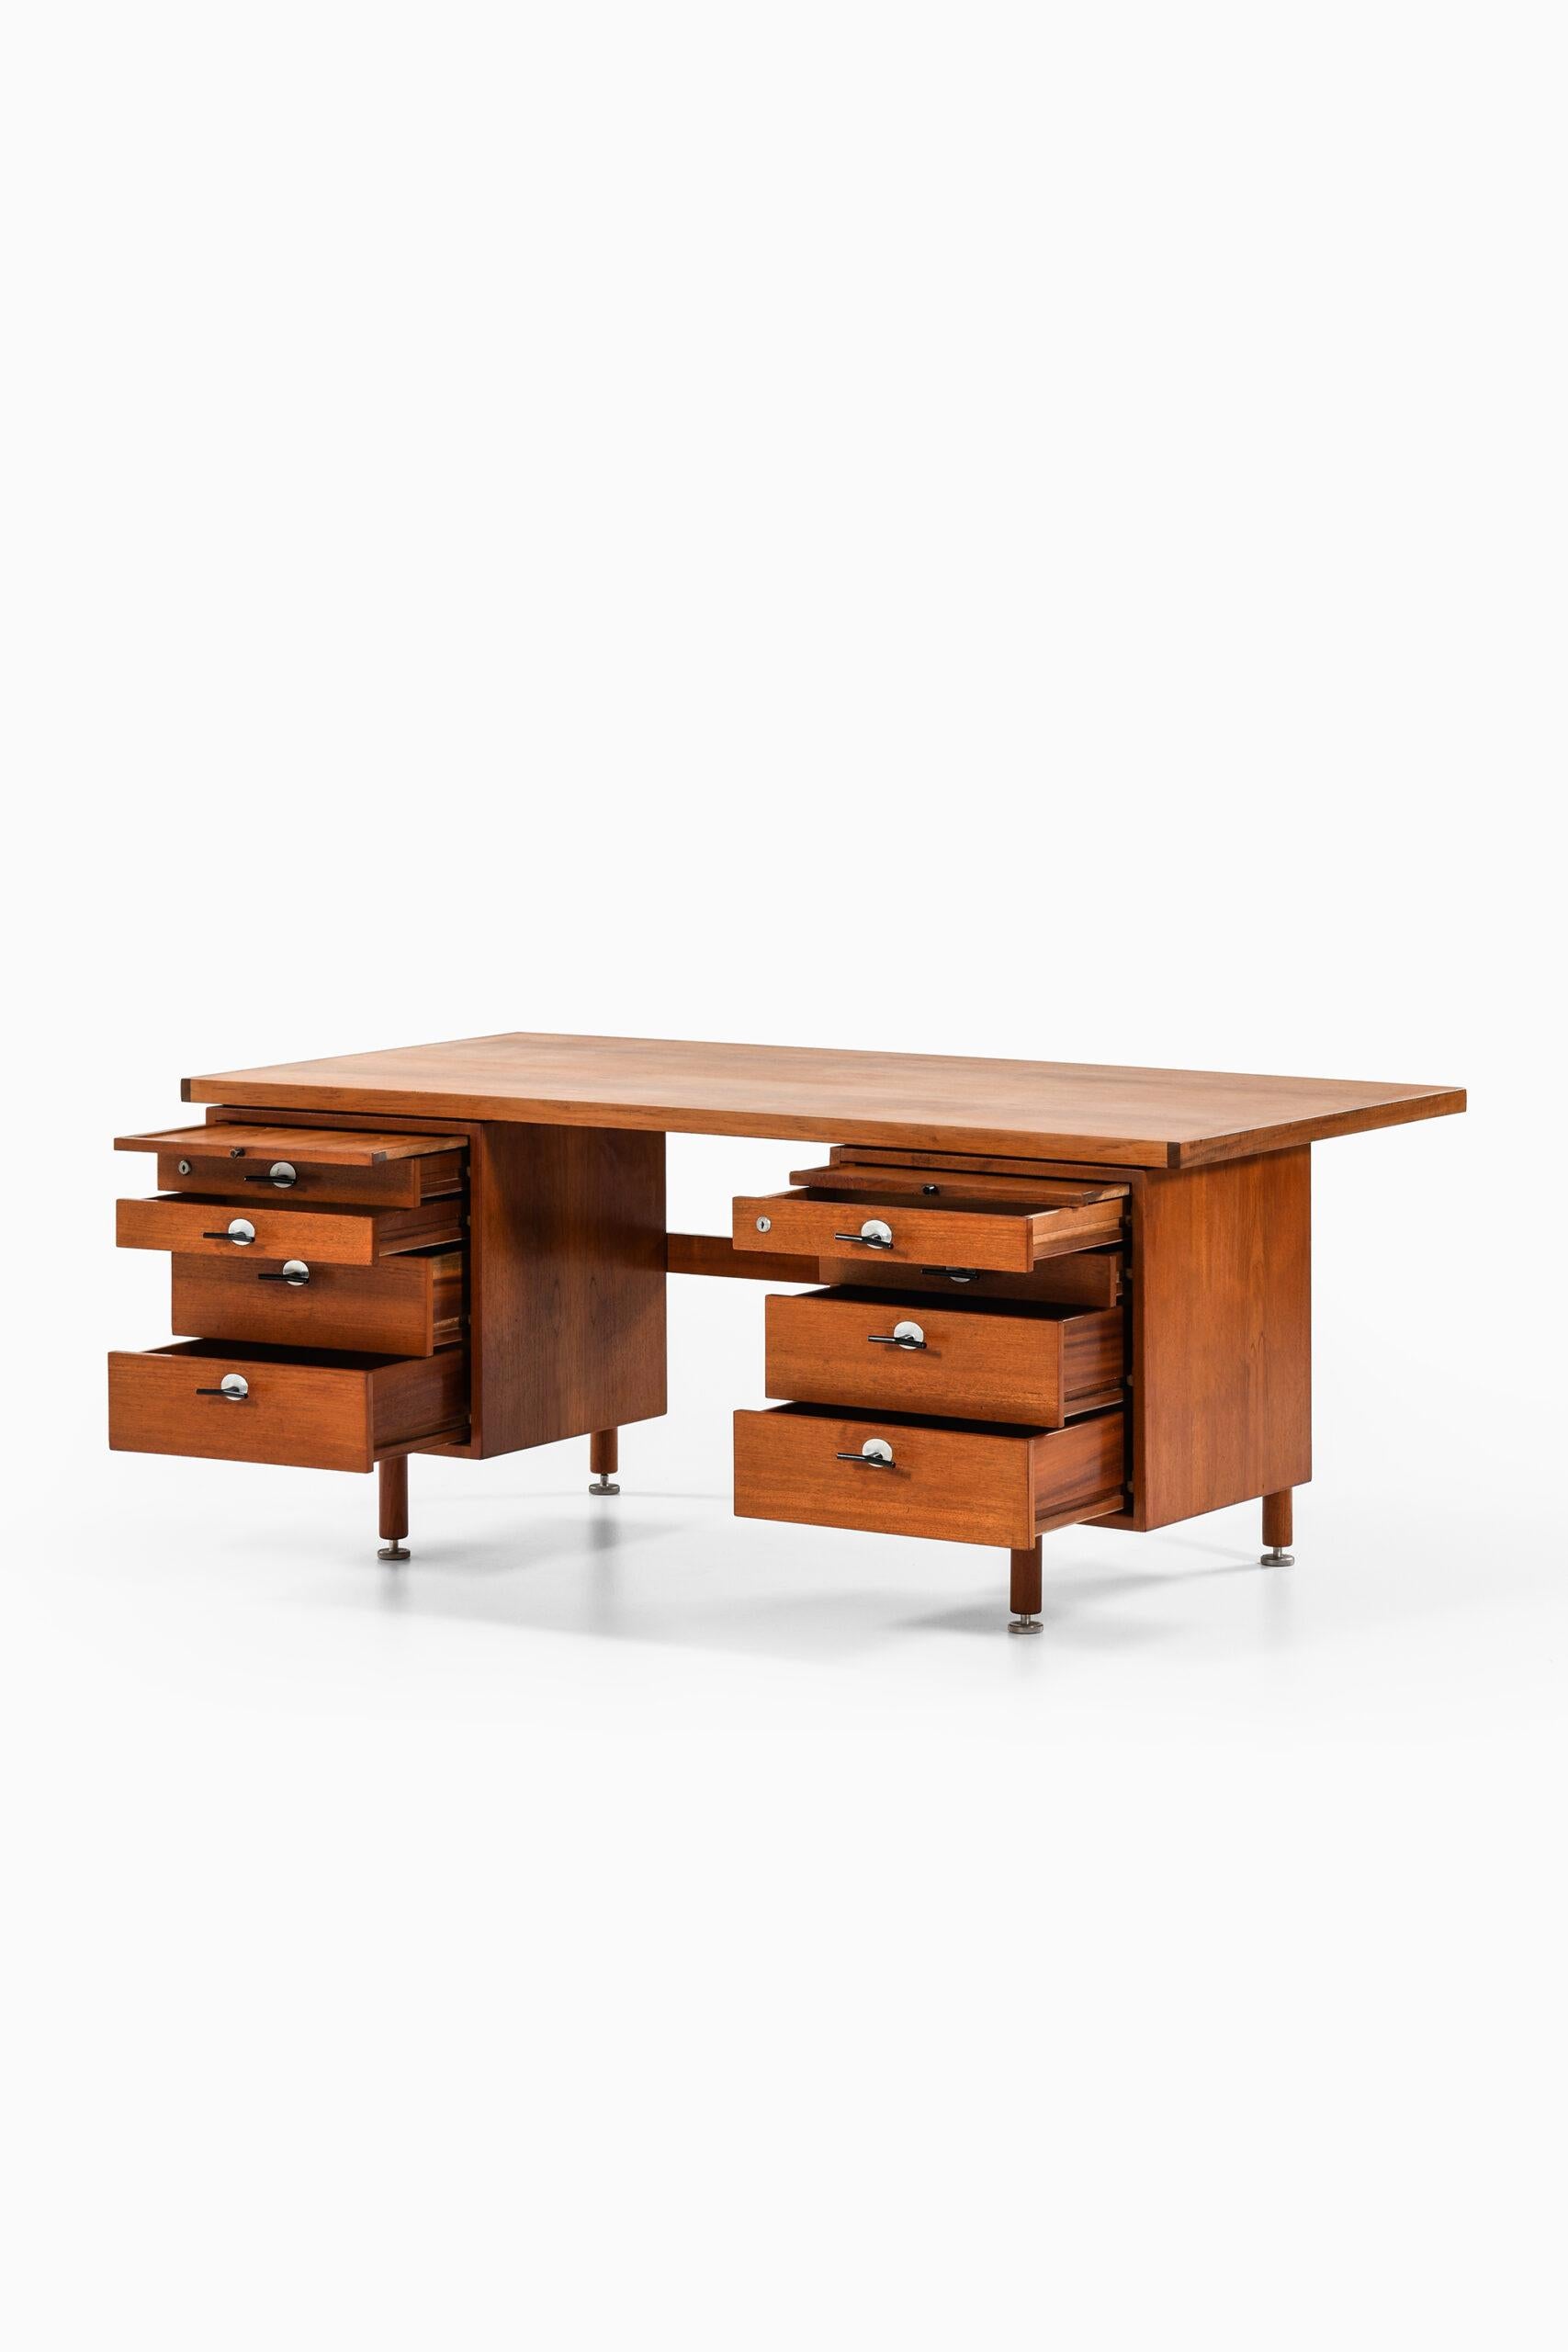 Mid-20th Century Jens Risom Desk Produced by Gutenberghus in Denmark For Sale